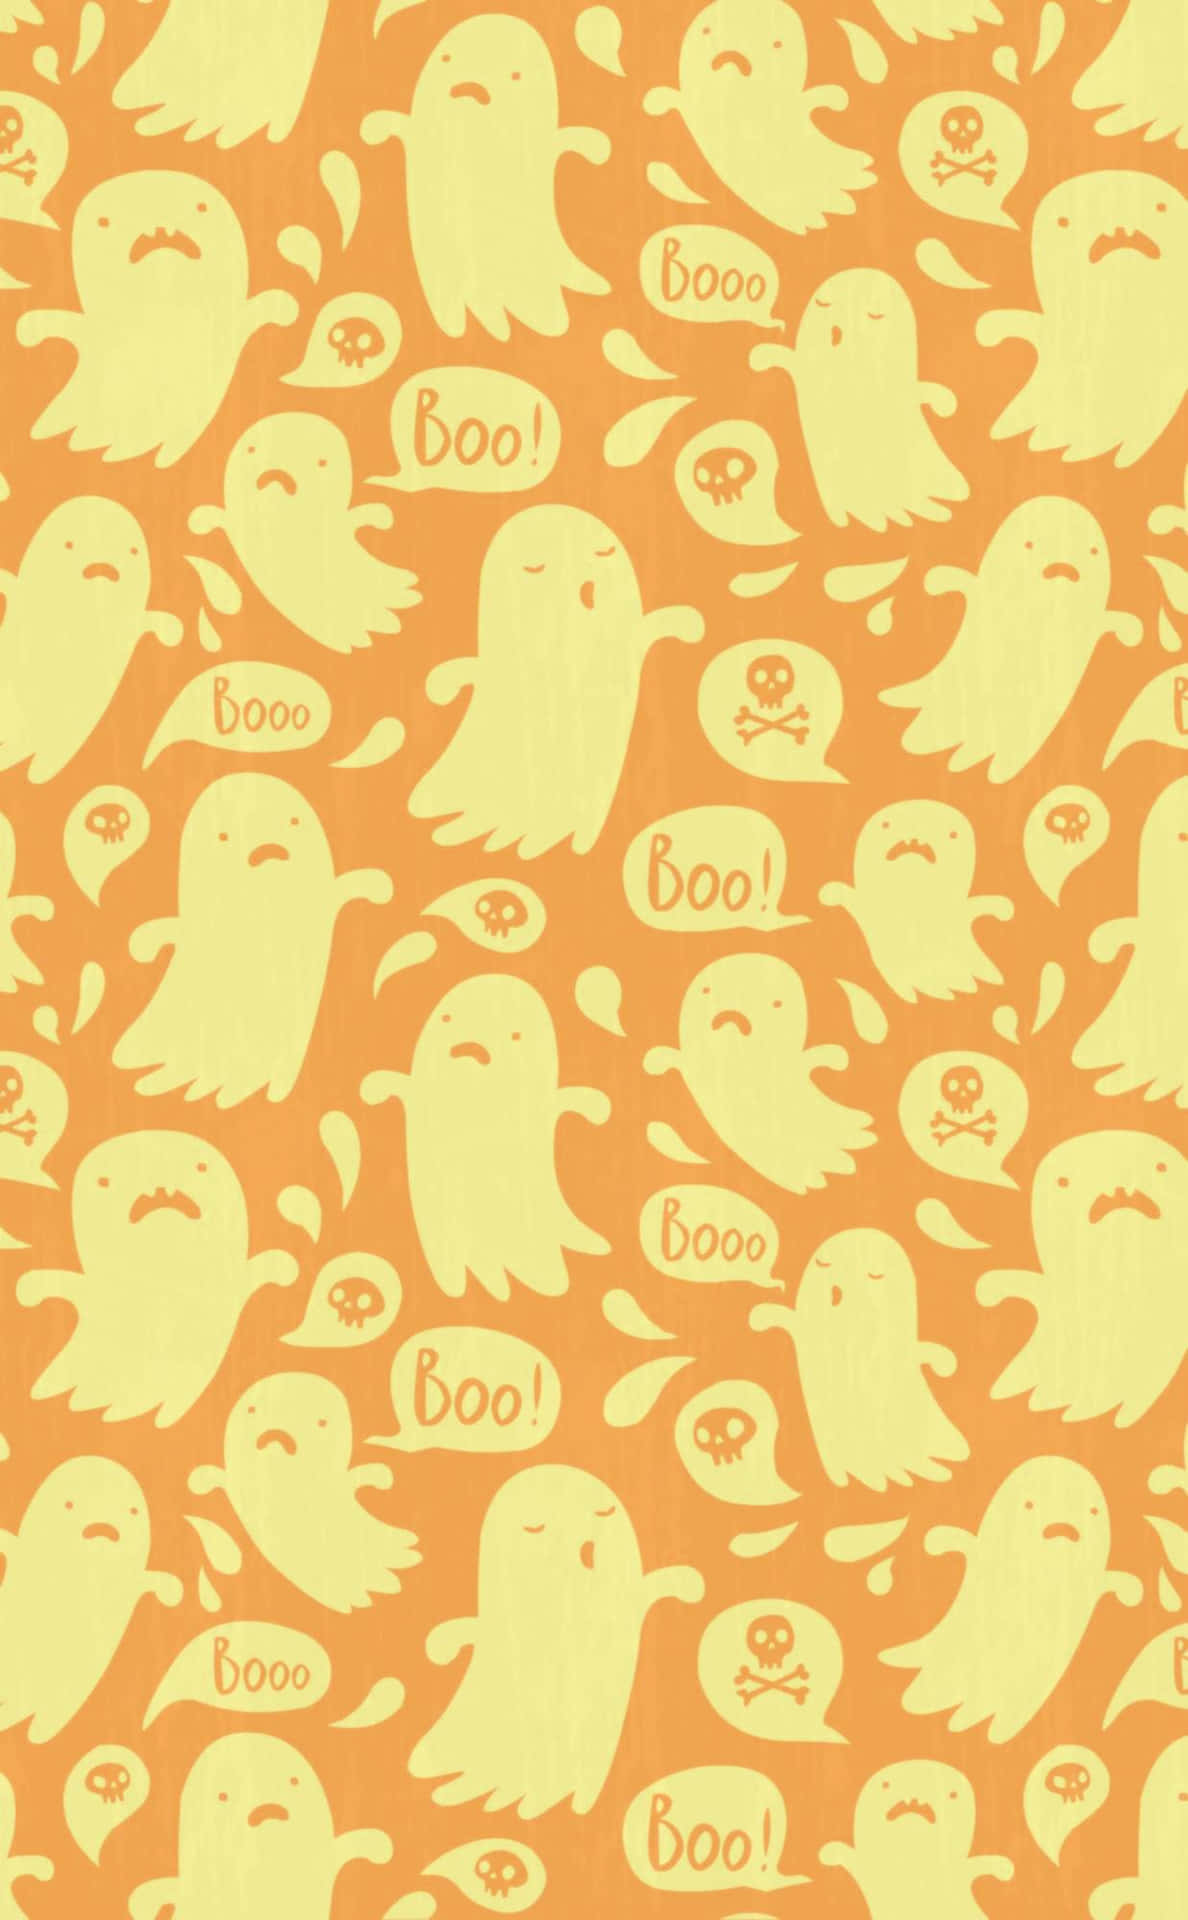 Boo And Stuff On Orange Background Wallpaper